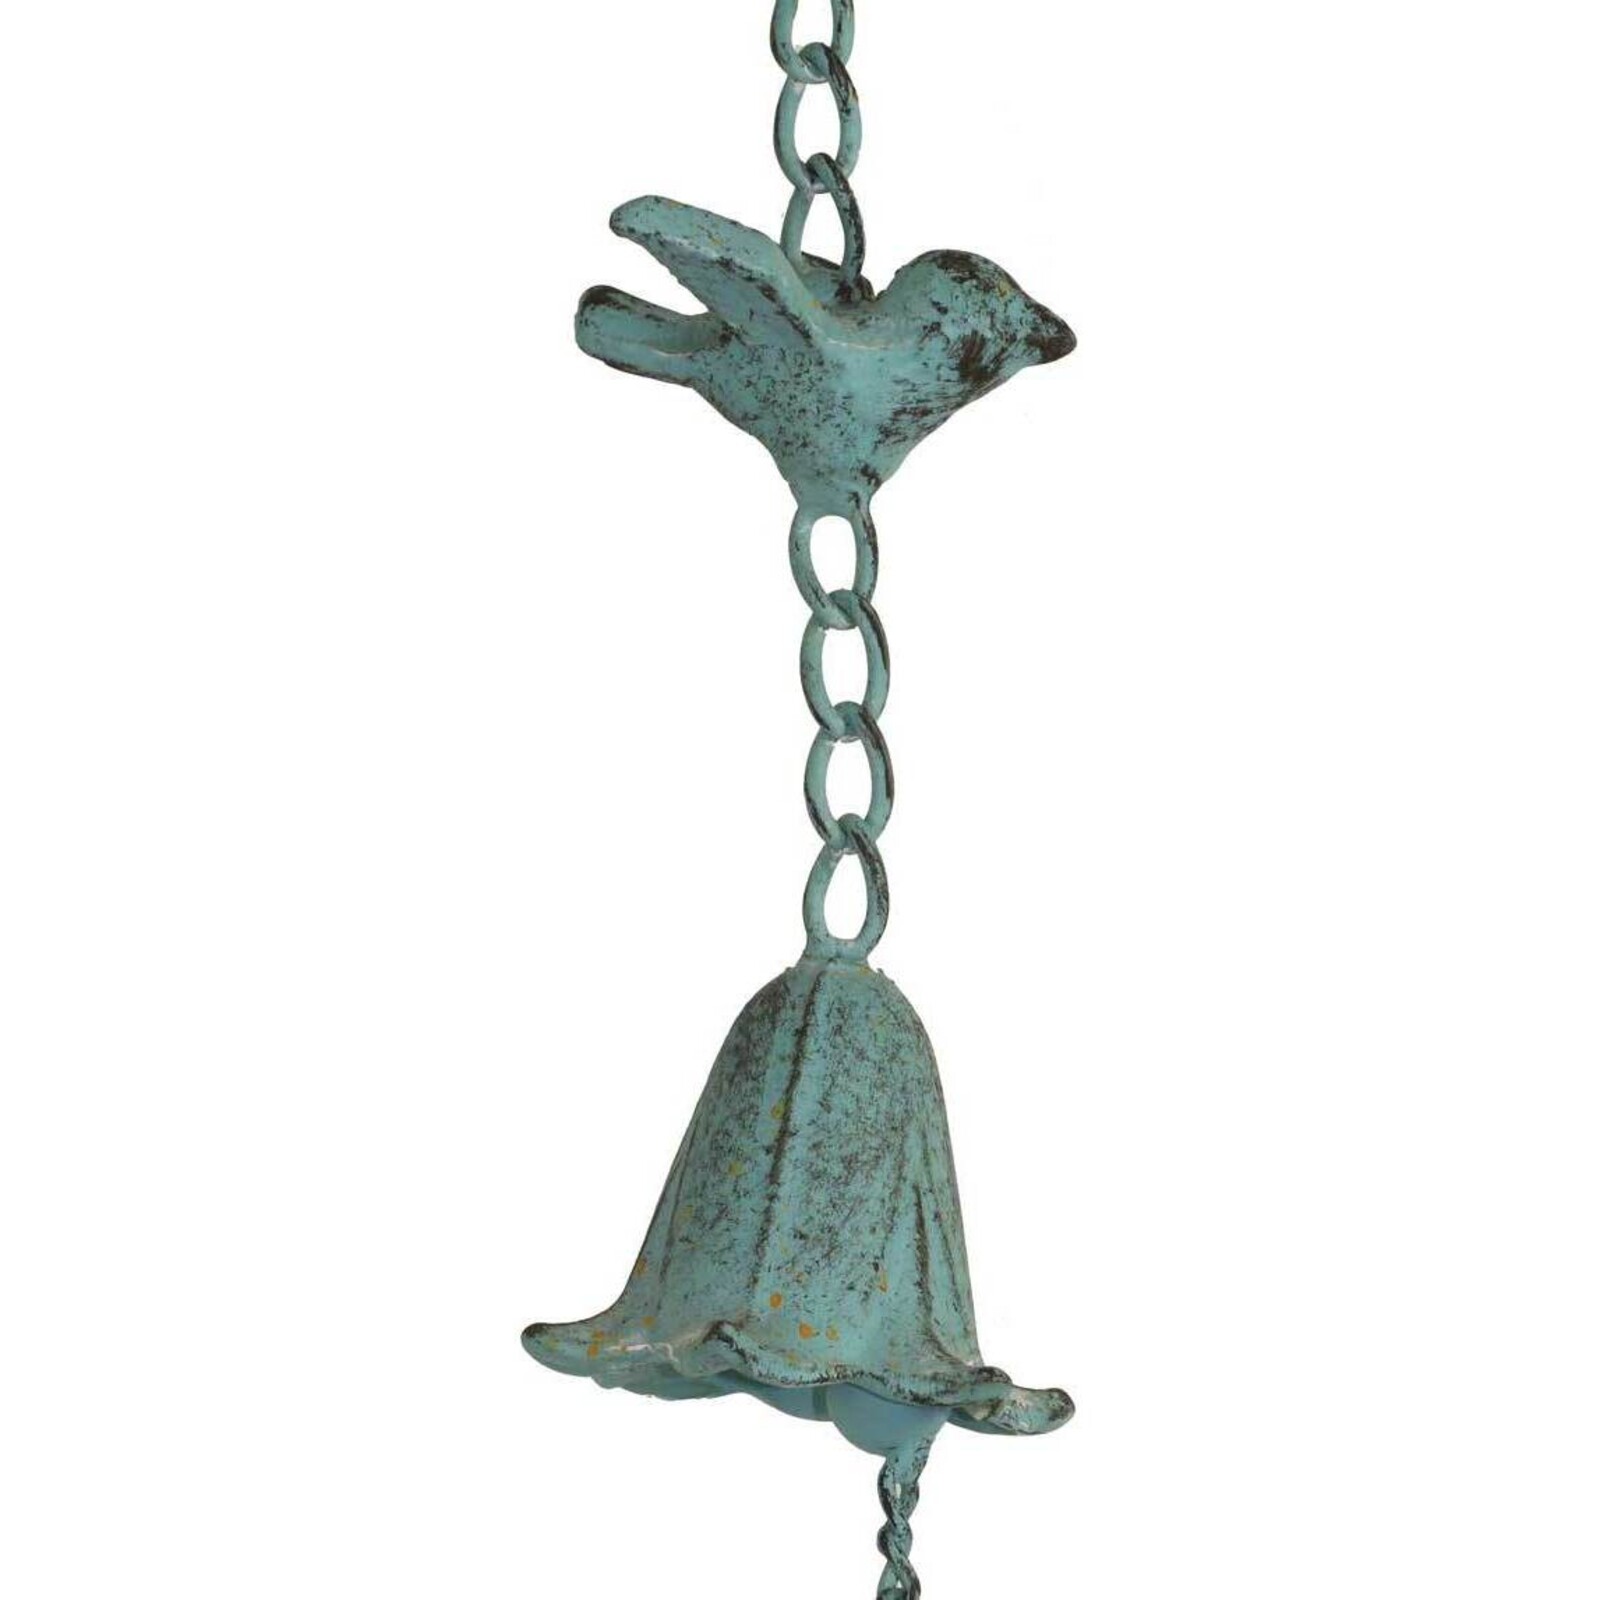 Hanging Bell Birds